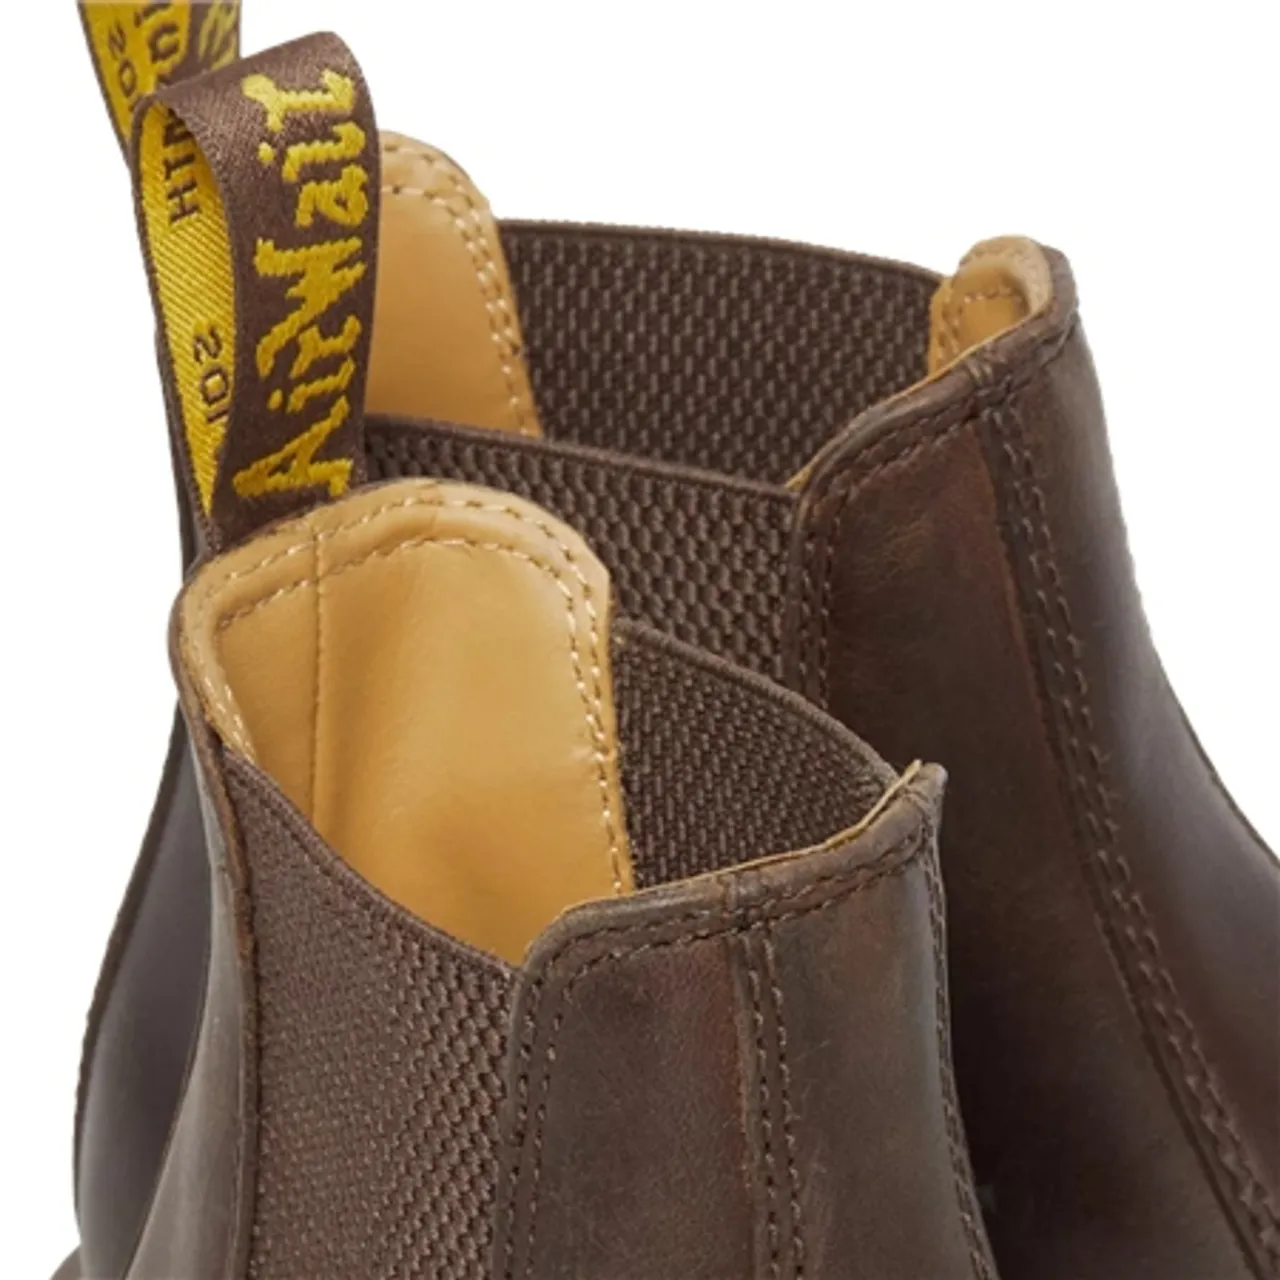 Dr Martens 2976 Yellow Stitch Crazy Horse Chelsea Boot - Dark Brown - UK 8 (EU 42)